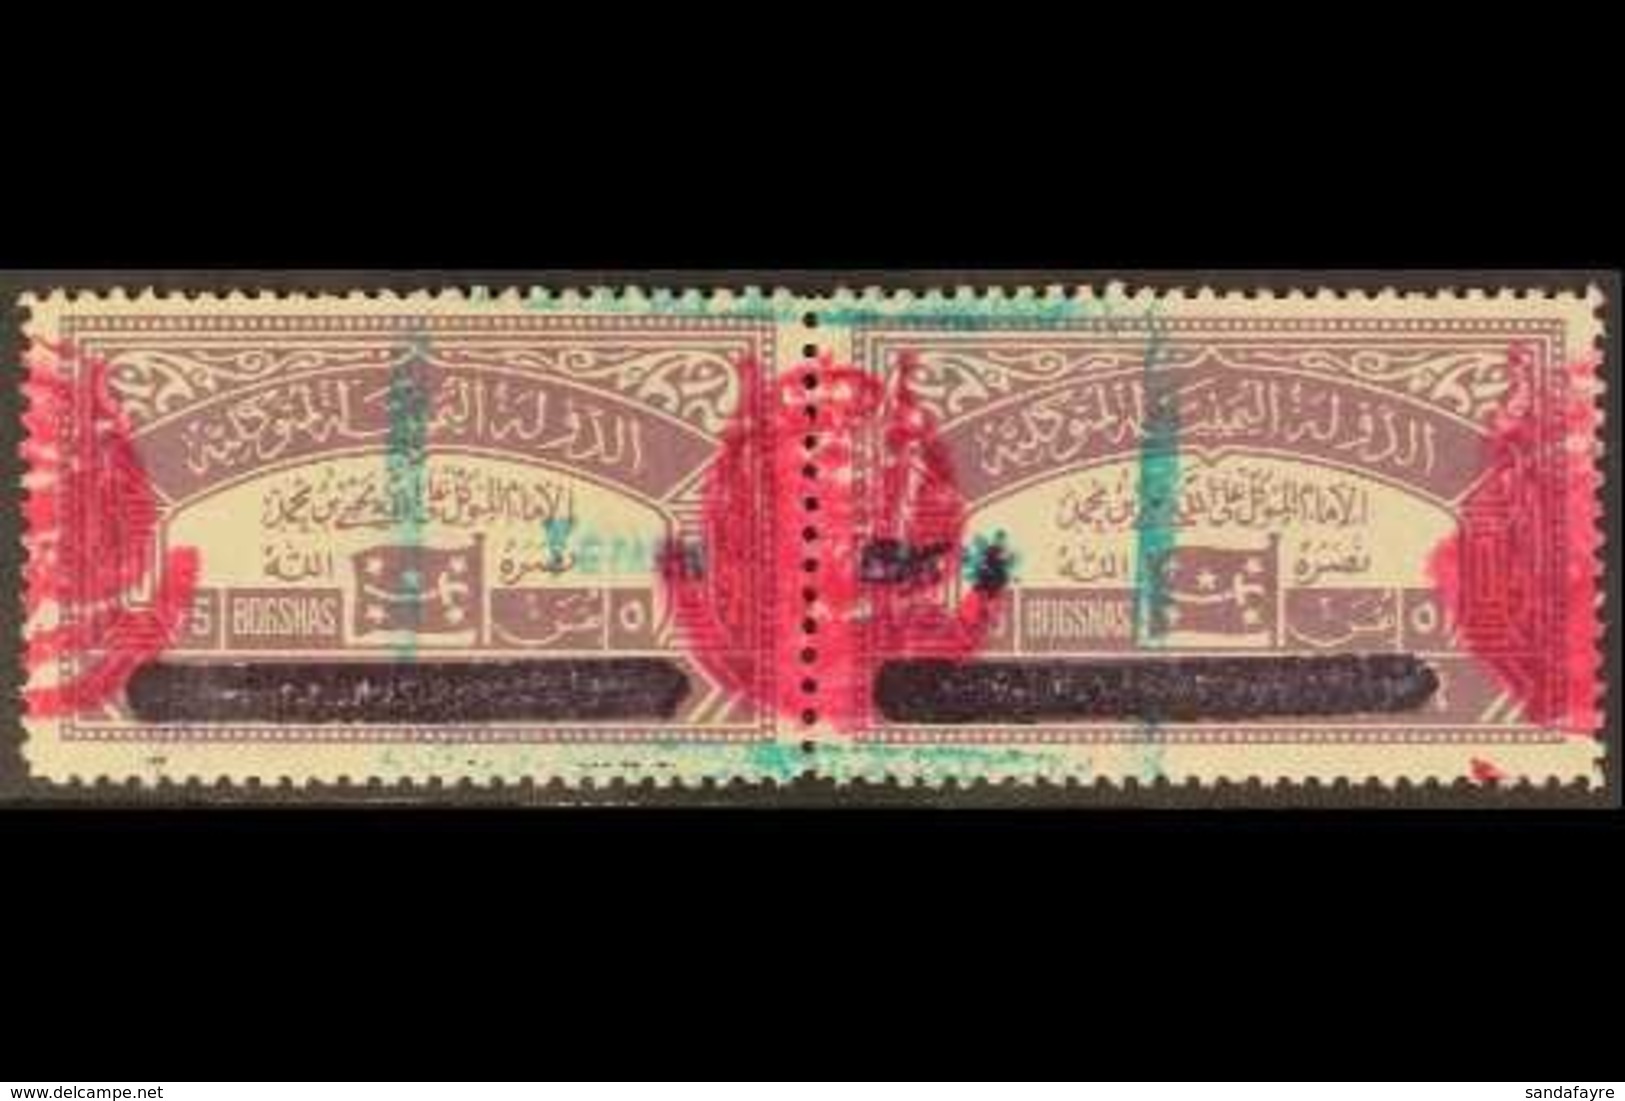 ROYALIST CIVIL WAR ISSUES  1964 10b (5b + 5b) Dull Purple Consular Fee Stamp Overprinted, Horizontal Pair Issued At Al-M - Yemen